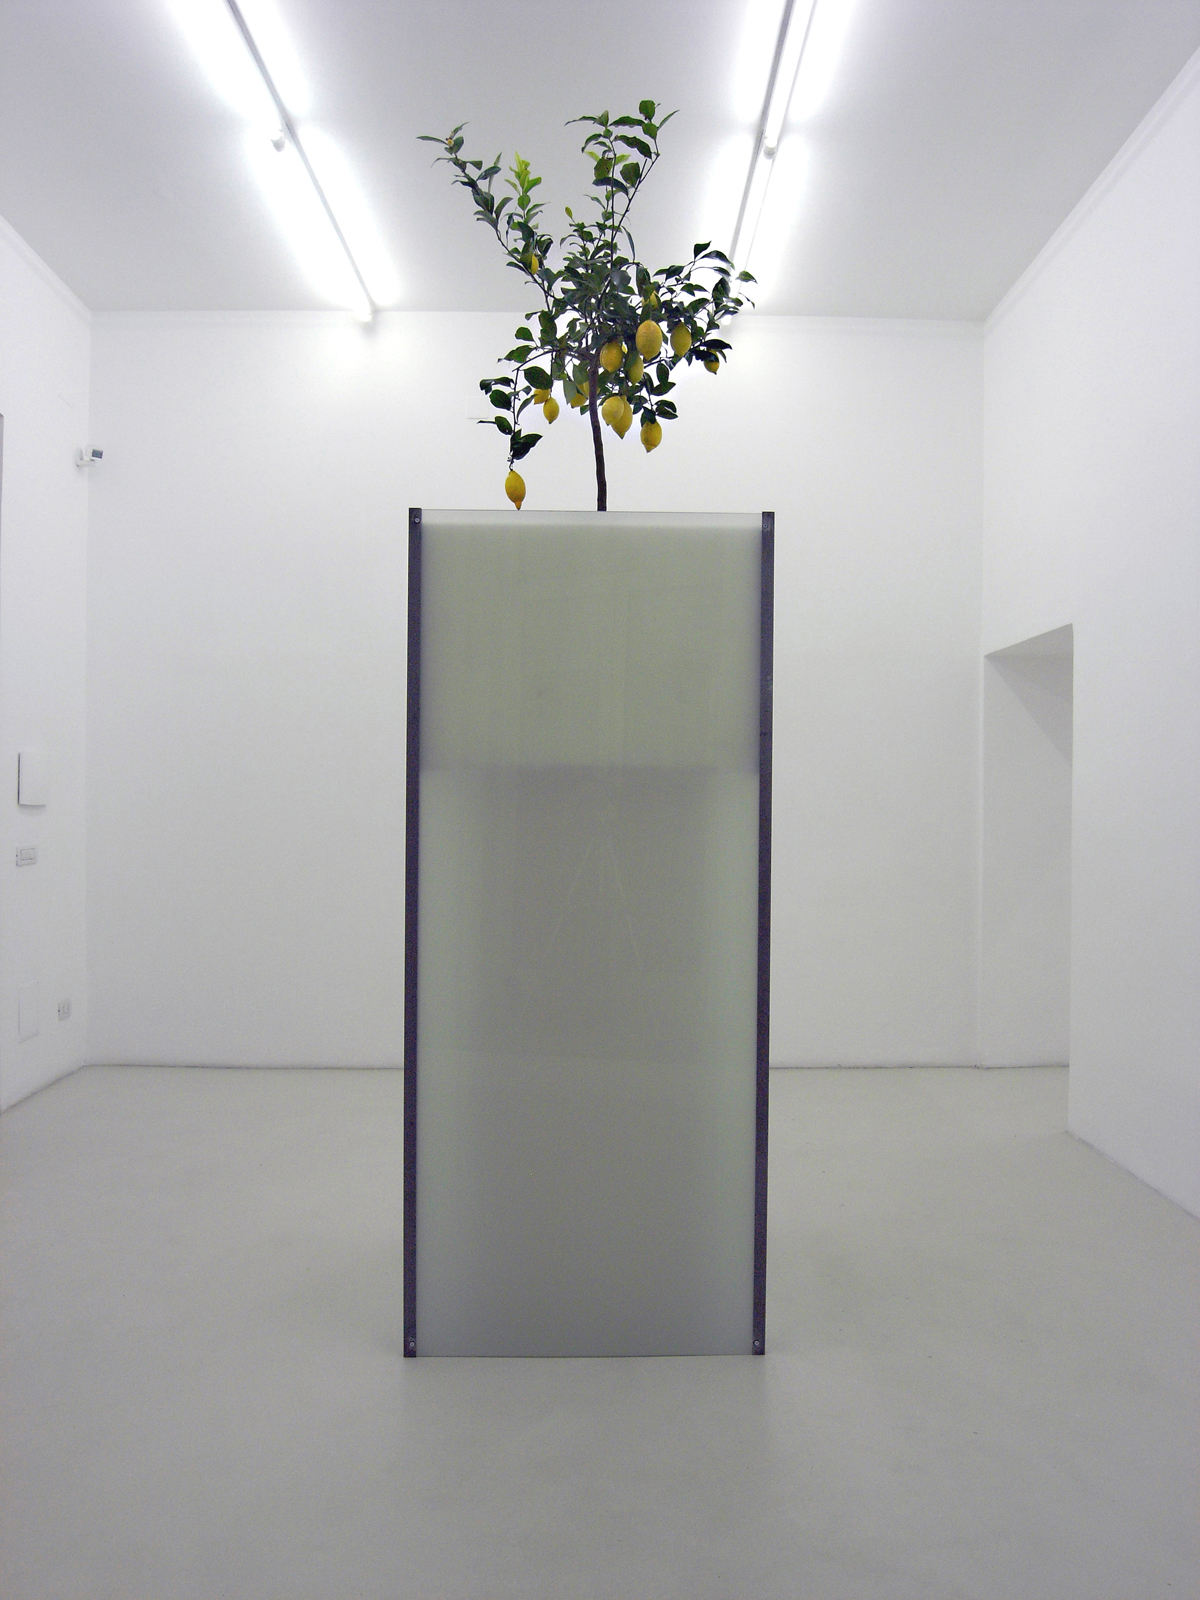 Microcosm, 2008, exhibition view